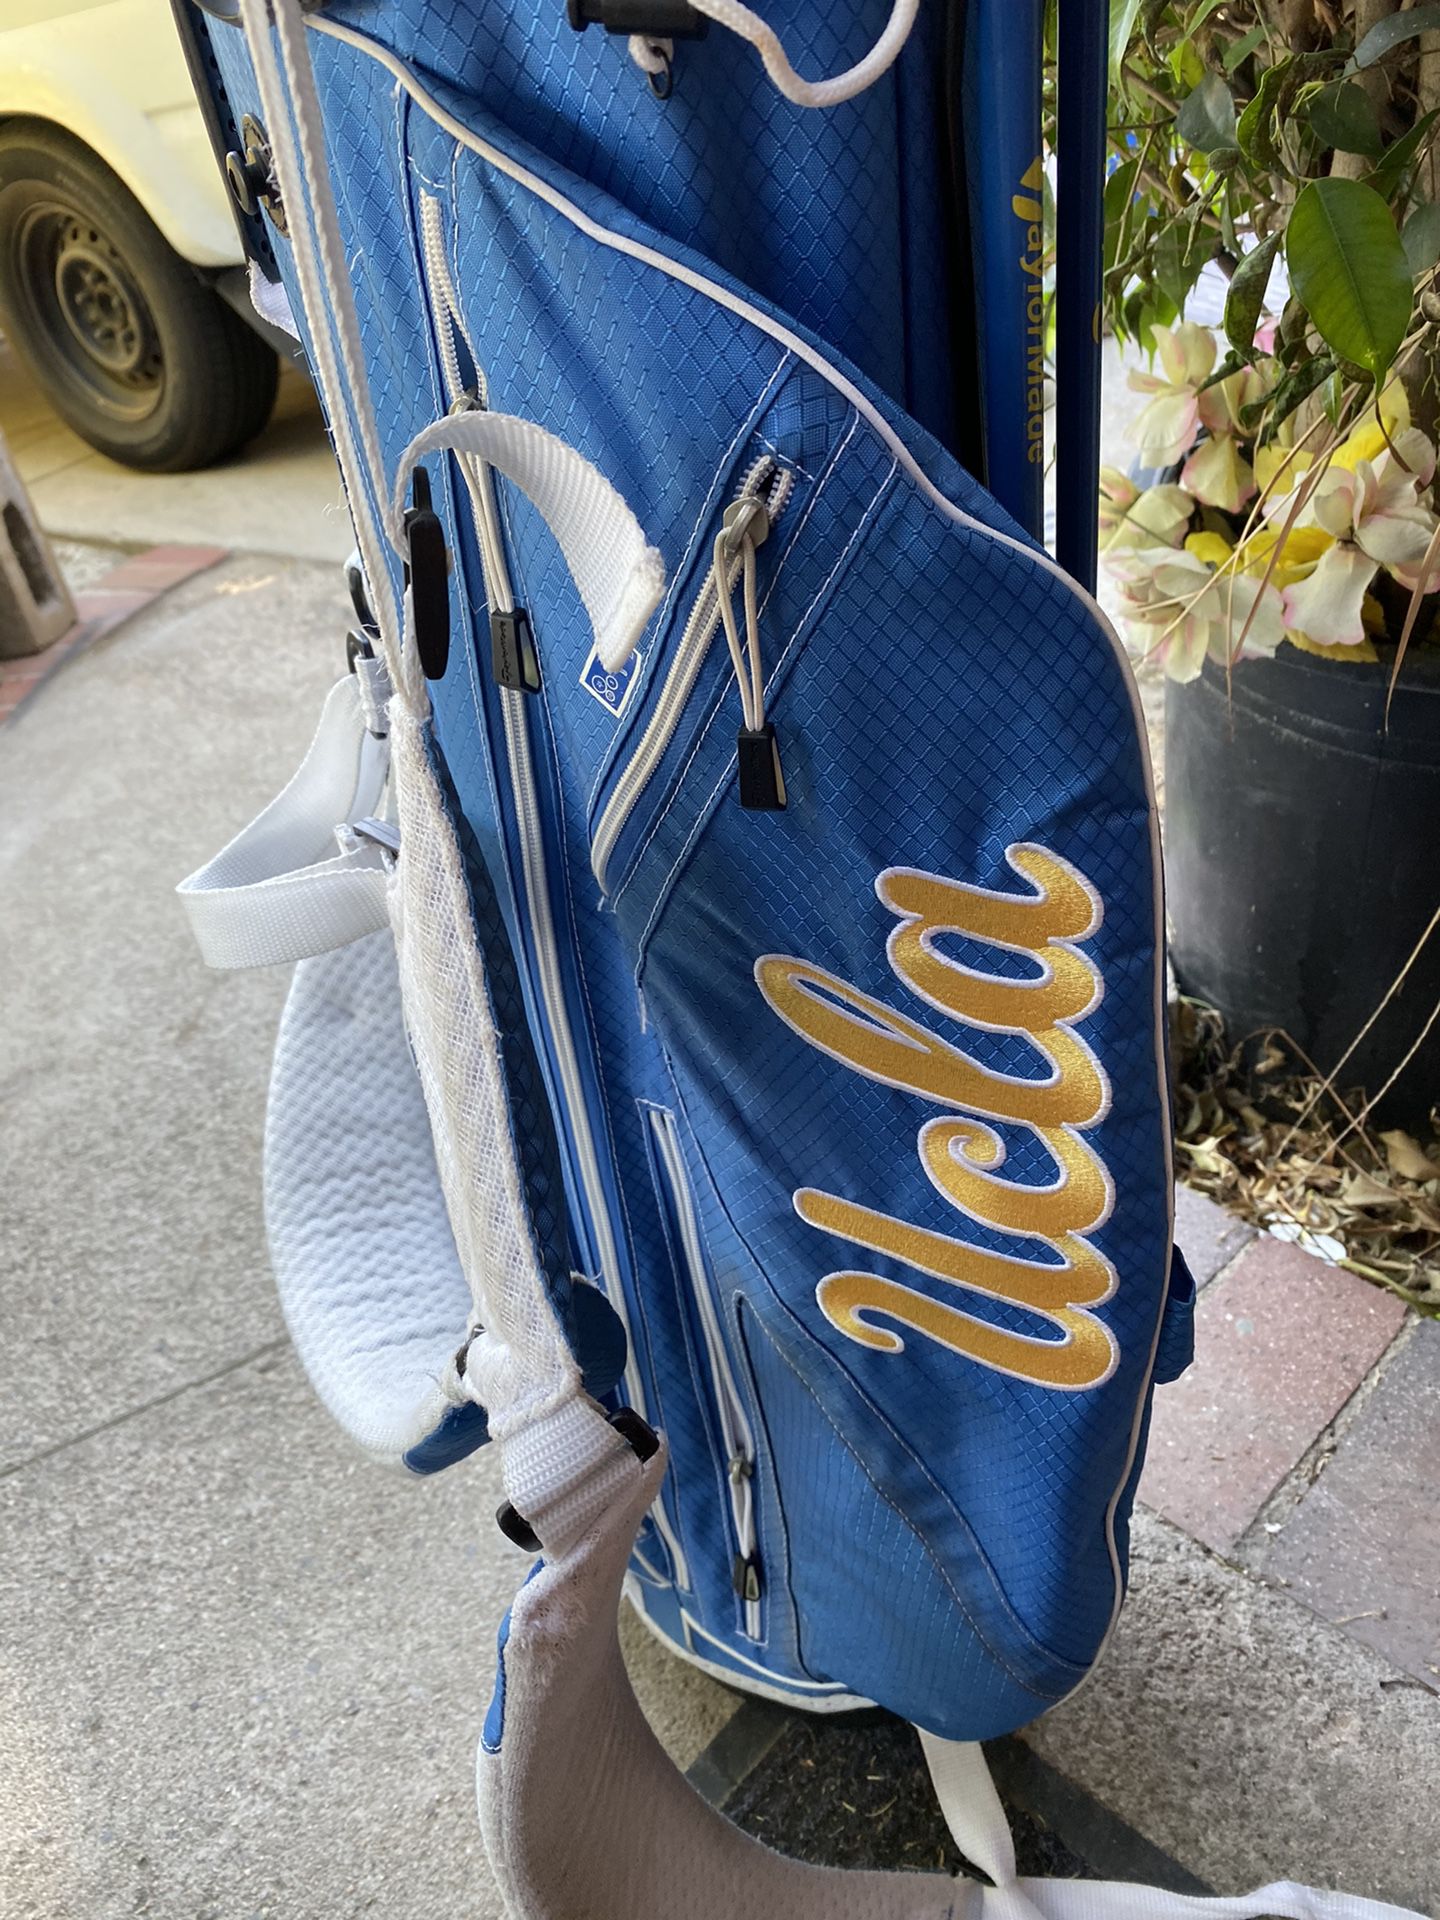 UCLA golf bag and clubs